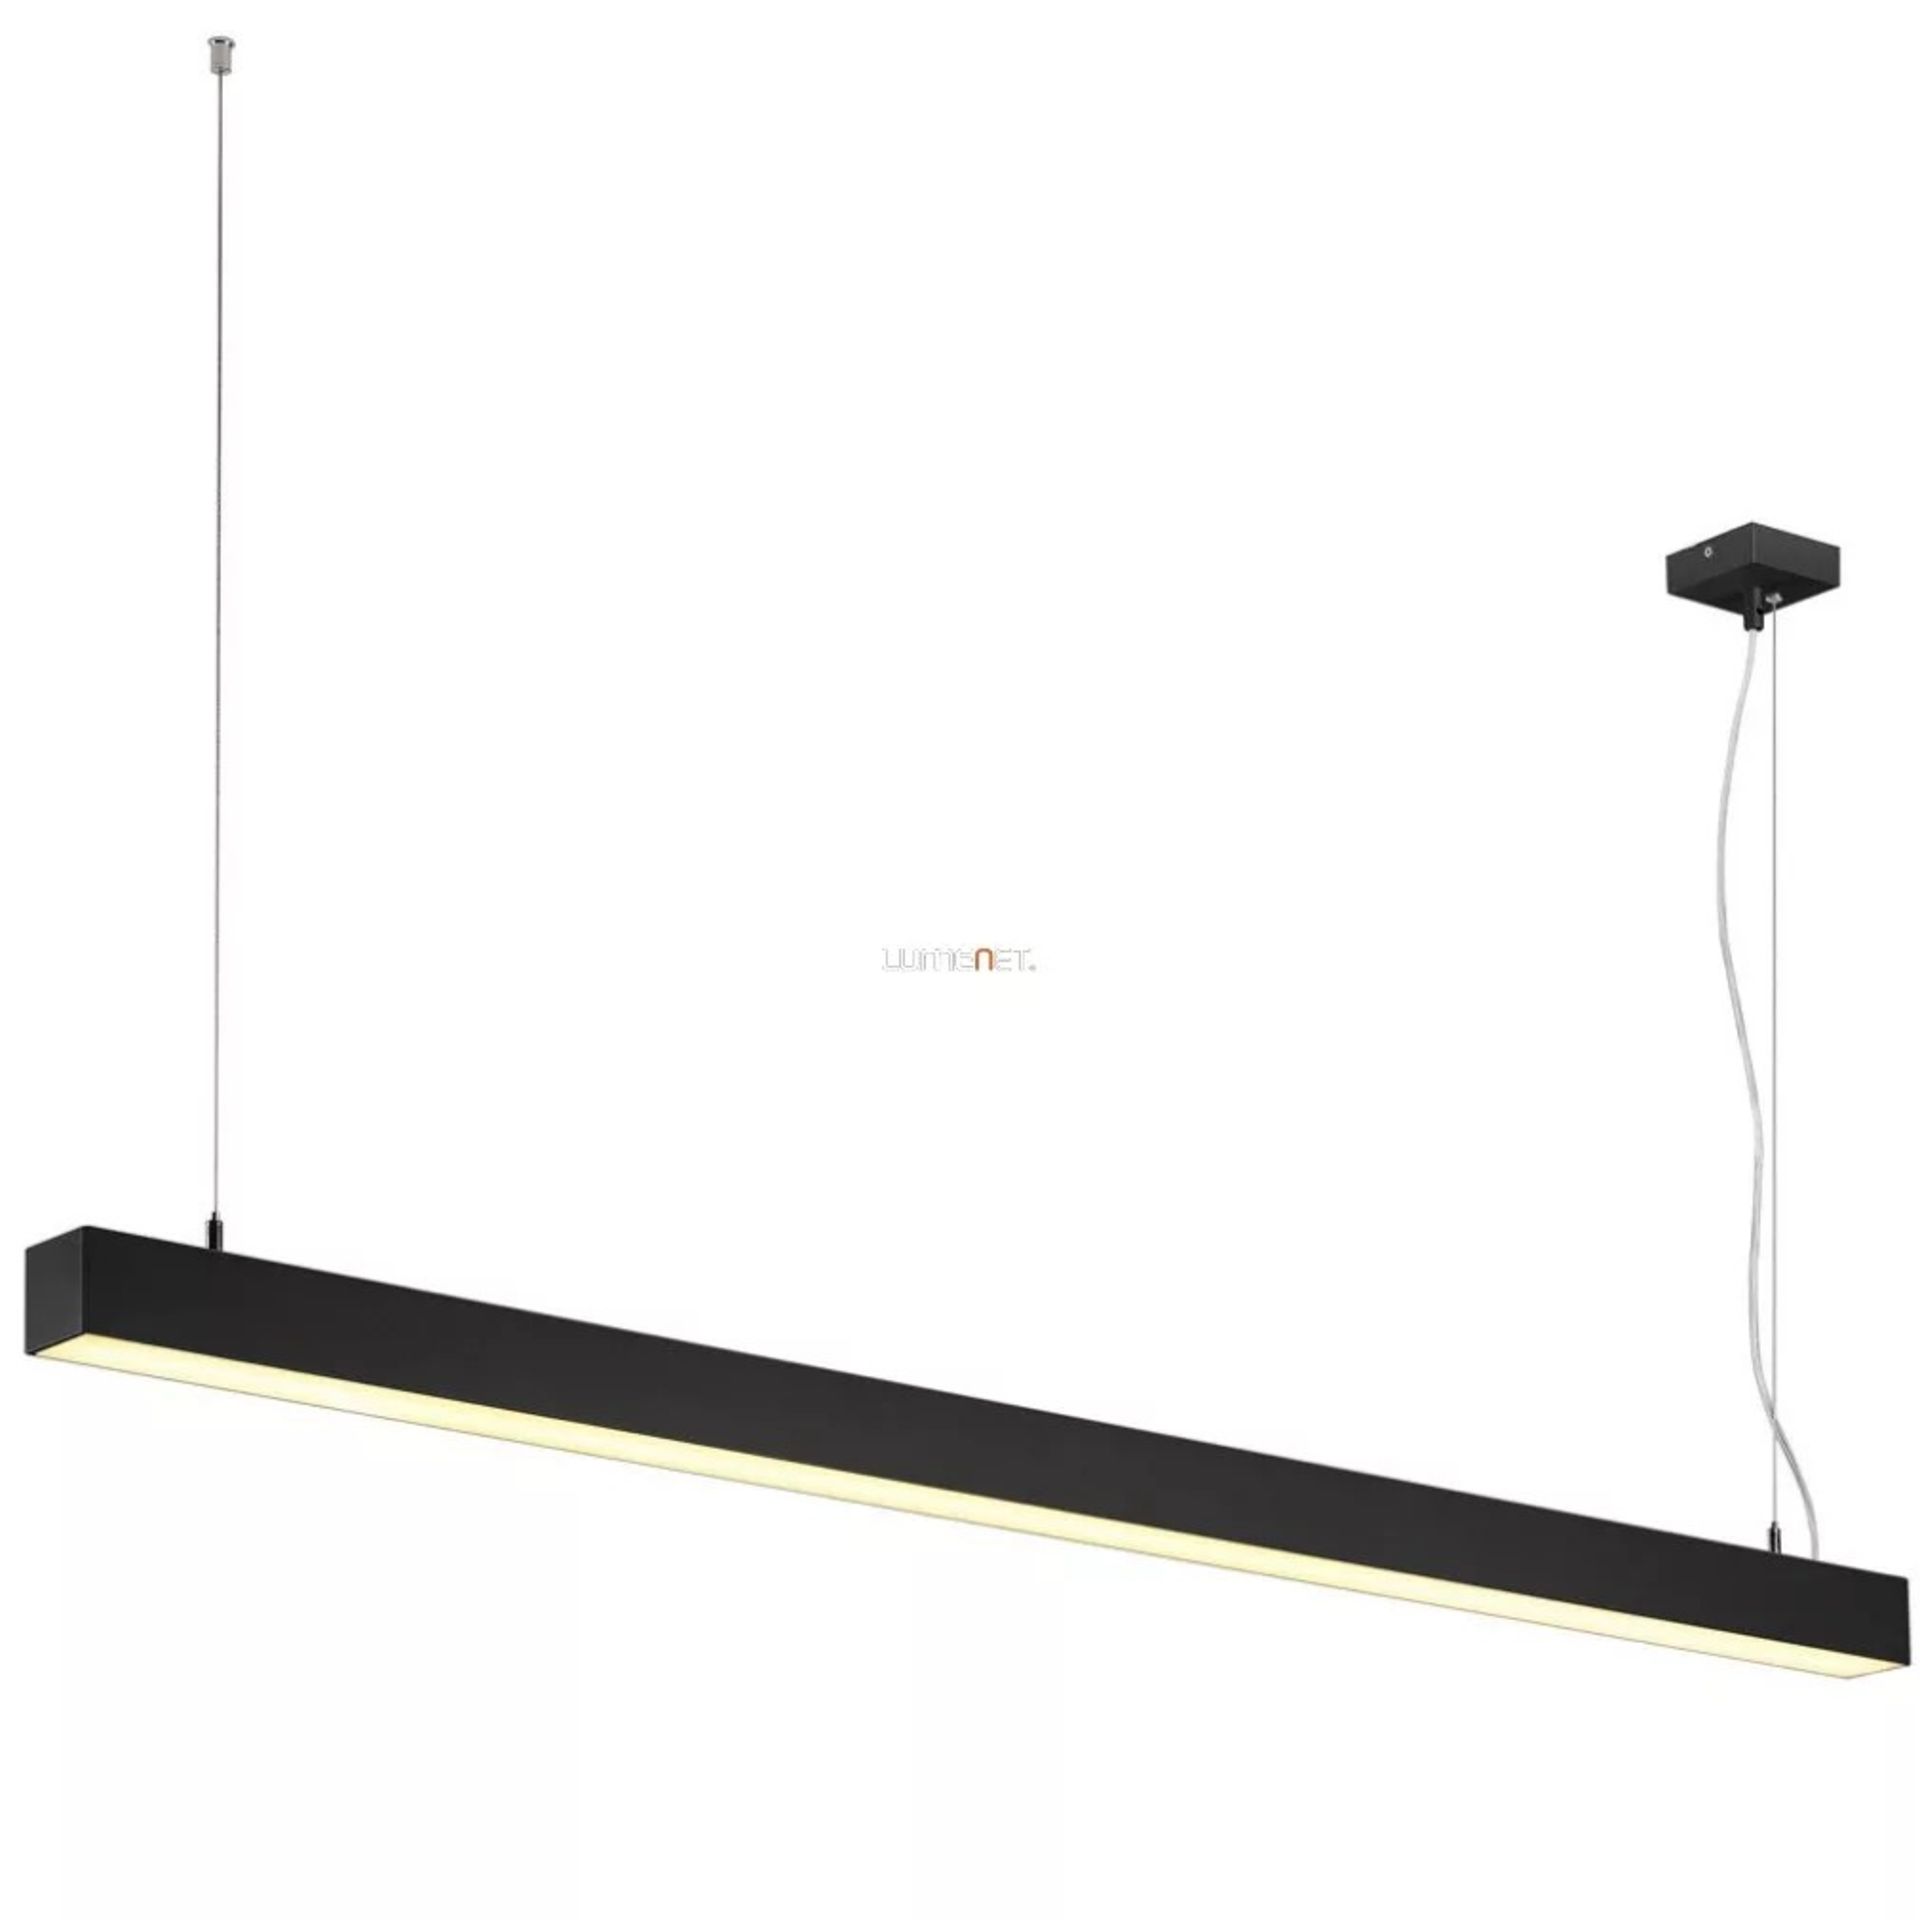 Four SLV Q-Line Dali Single Dimmable LED Pedant Lights in Black (REF: 1001309 | EAN 4024163196116).